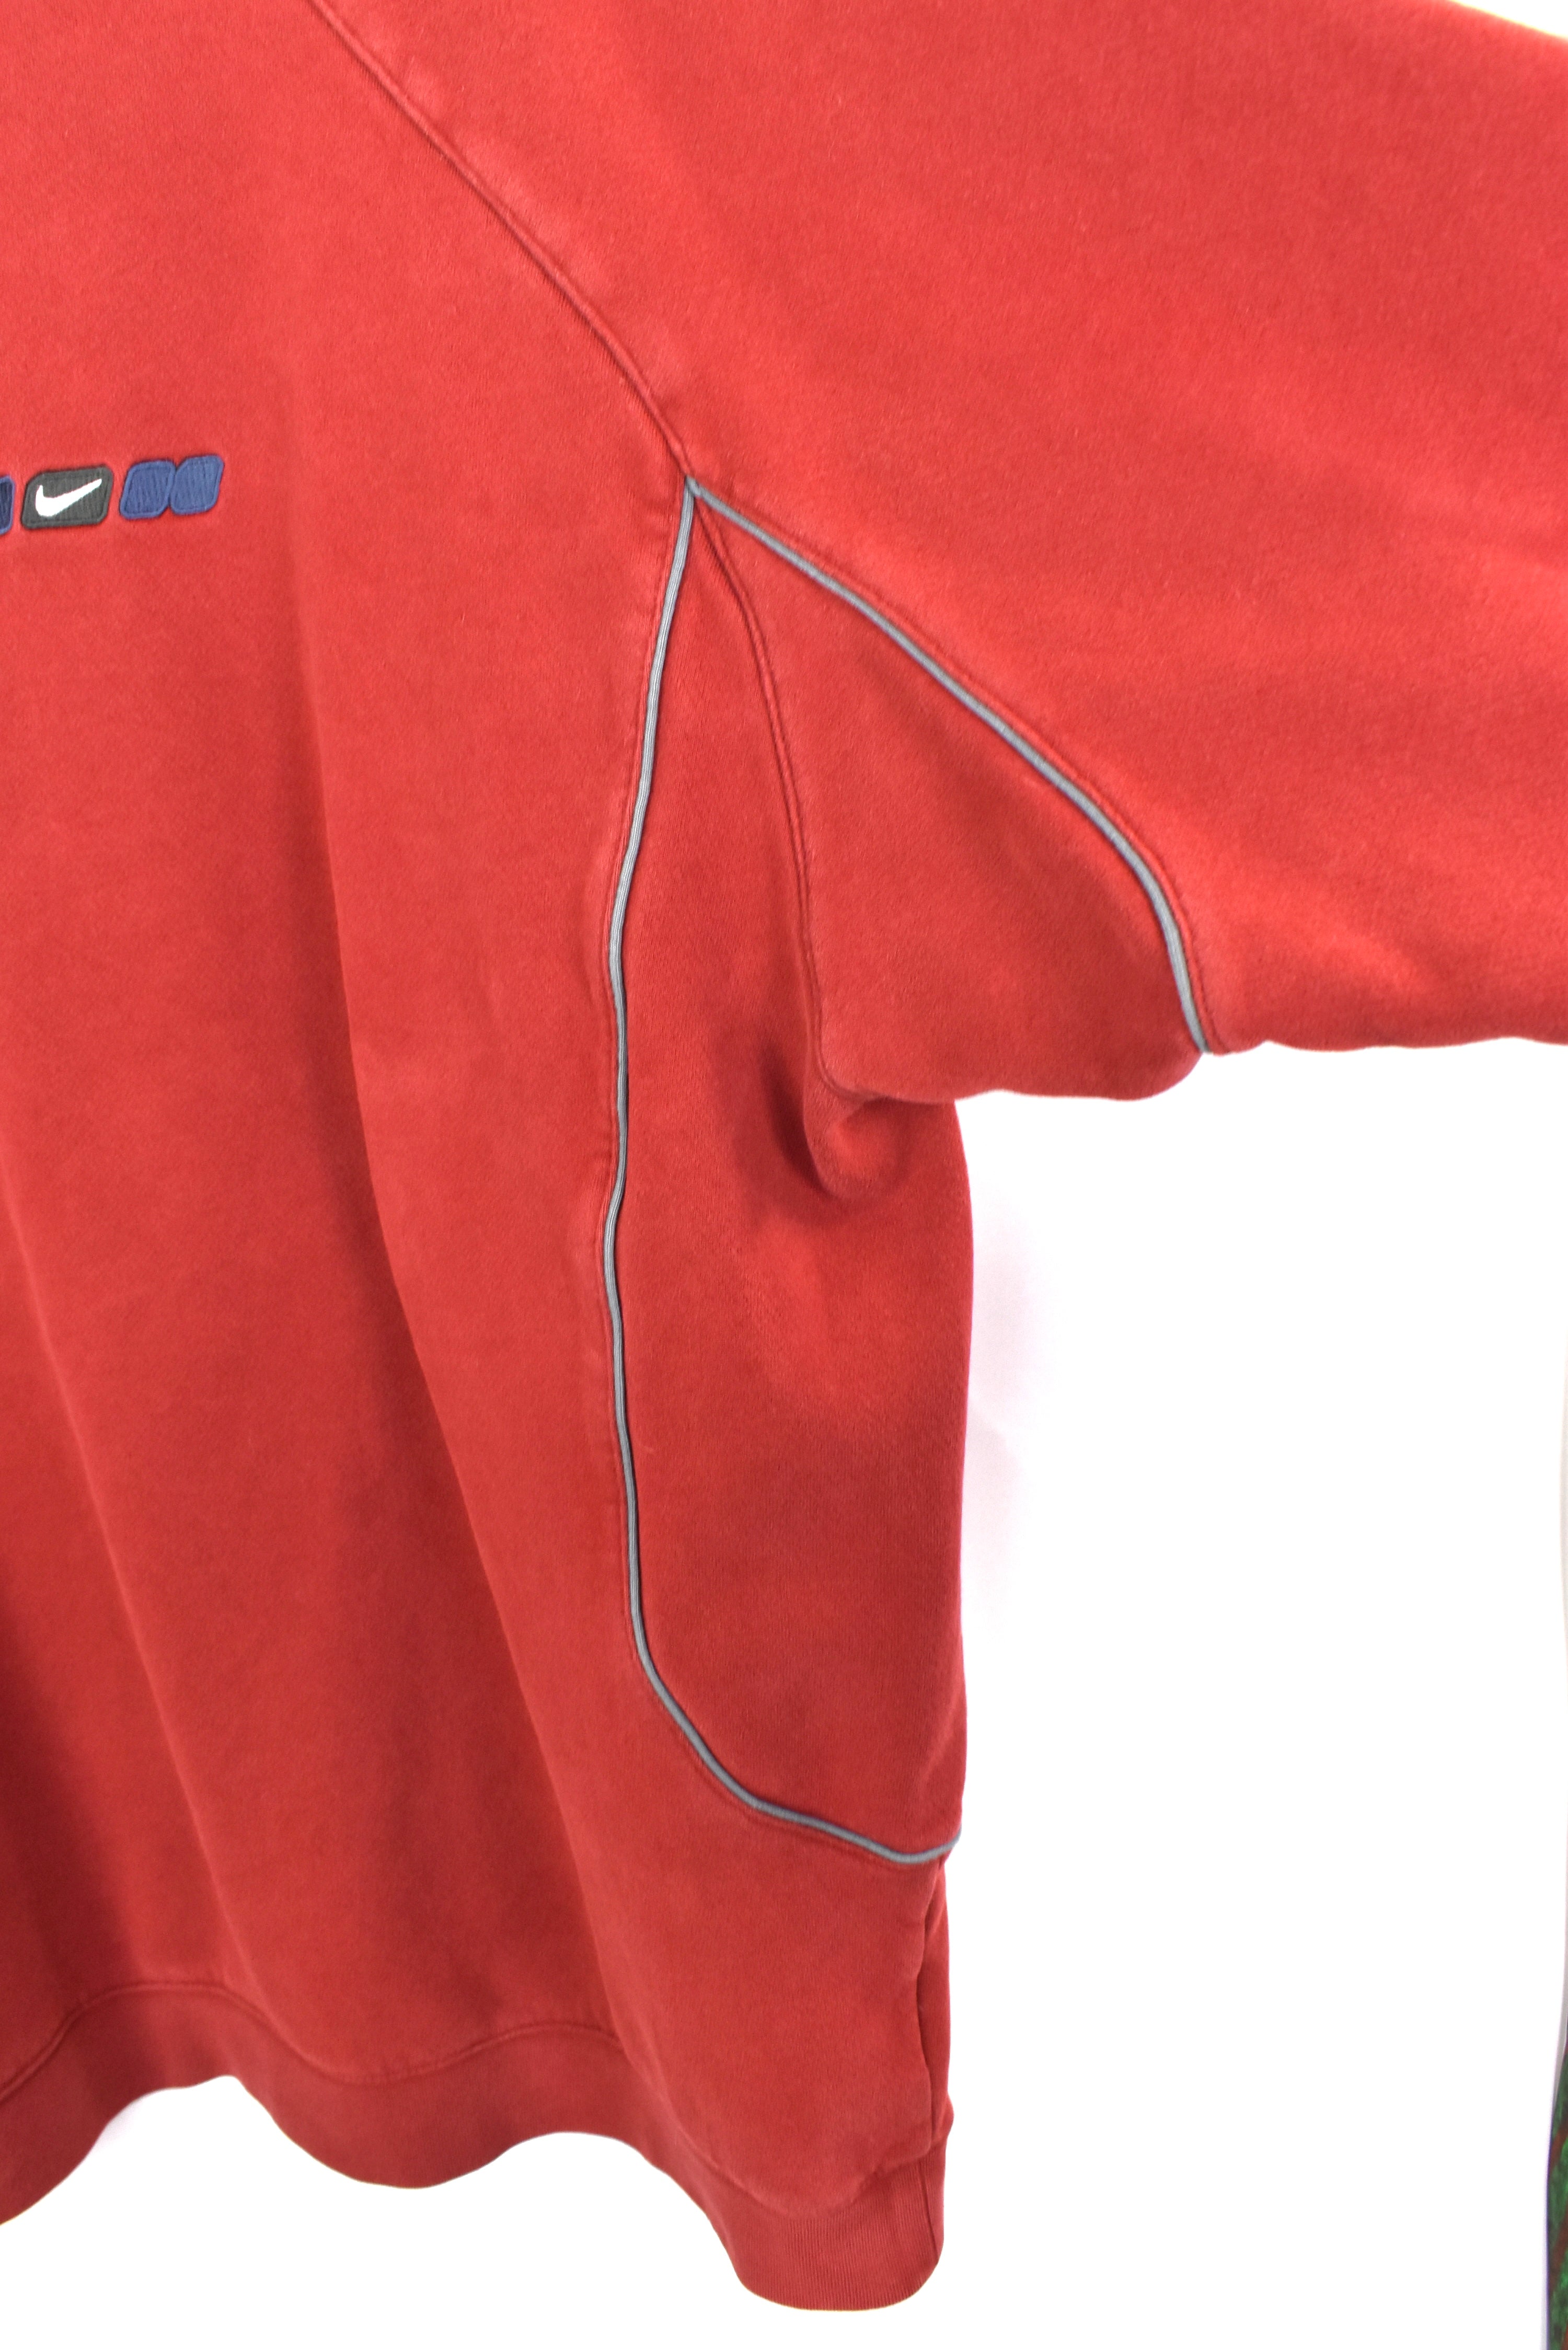 Vintage Nike sweatshirt, embroidered crewneck - XXL, burgundy NIKE